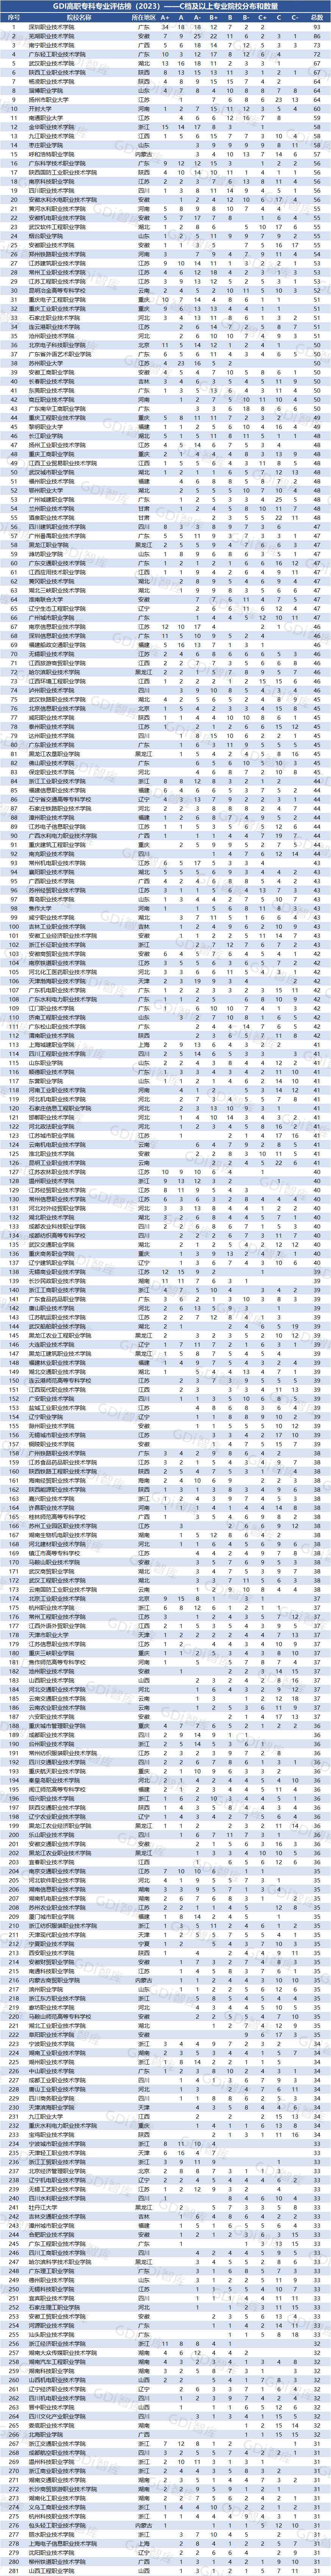 GDI高职专科专业评估榜（2023）发布 广东C档及以上专业院校数量居前列